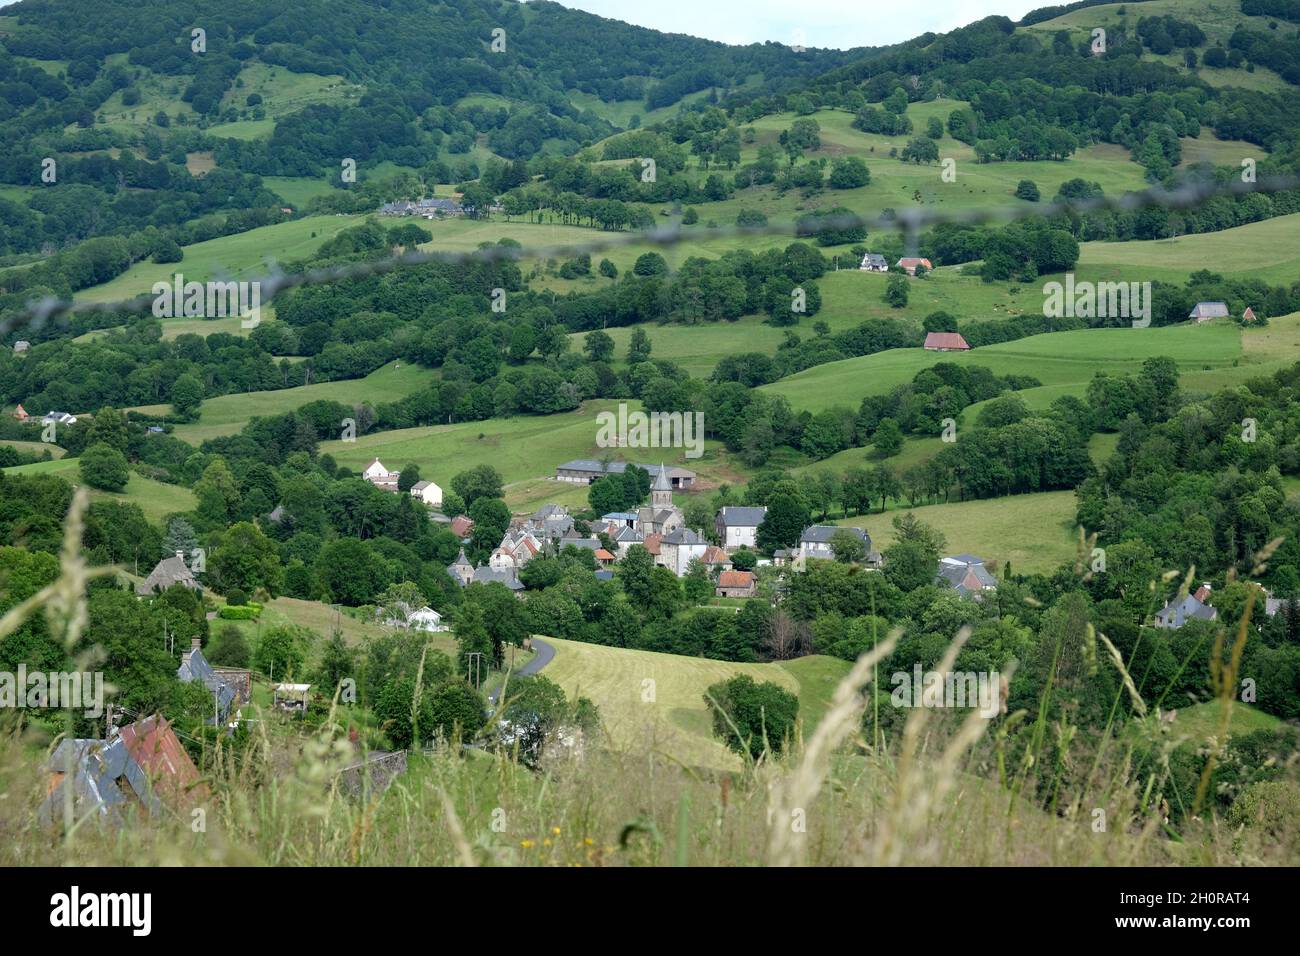 Mandailles Saint Julien in the Jordanne Valley (central France) Stock Photo